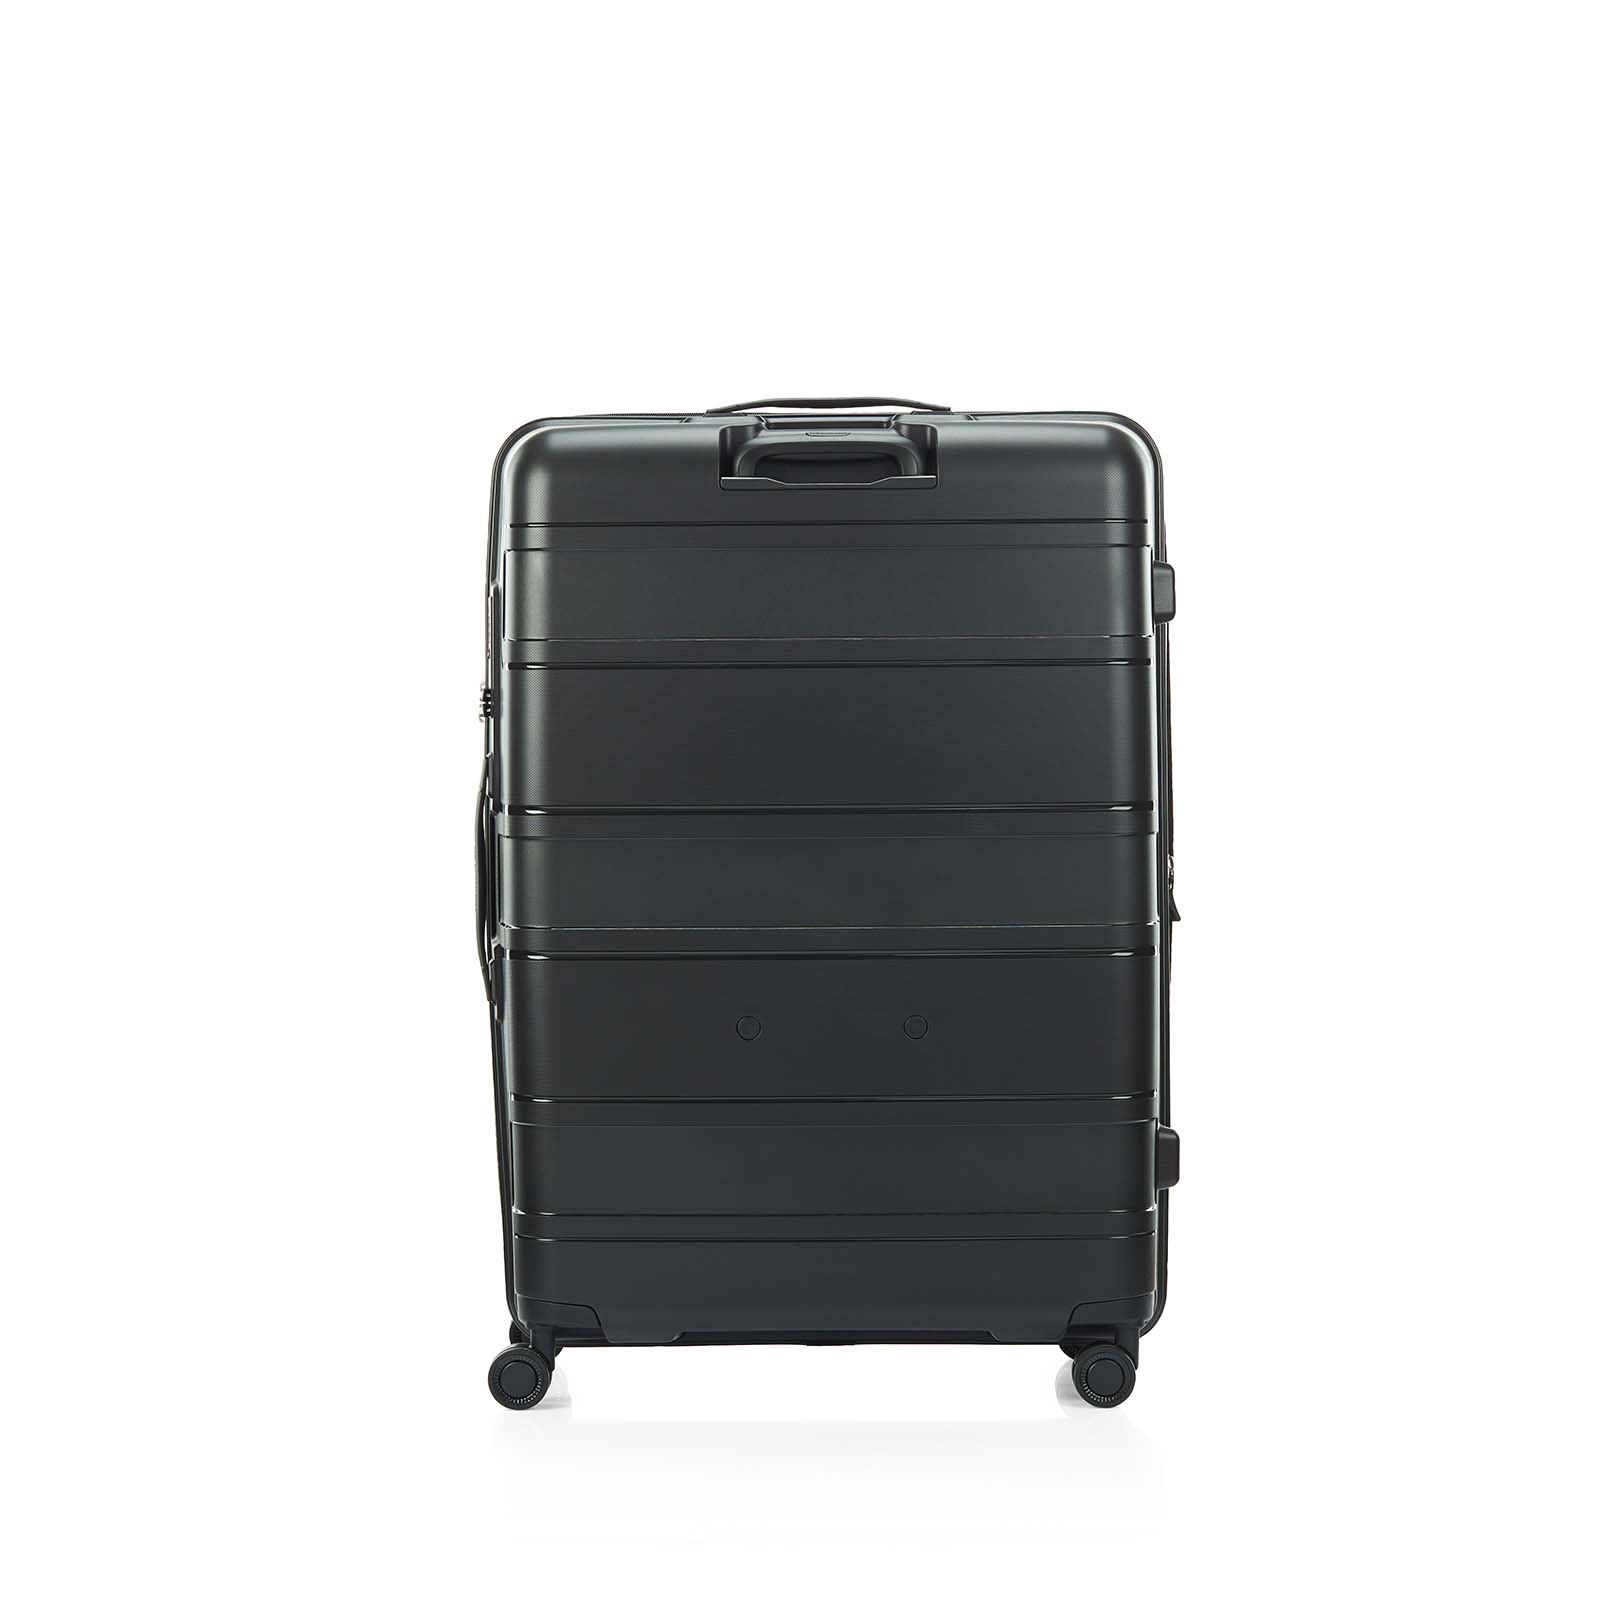 American-Tourister-Light-Max-82cm-Suitcase-Black-Back